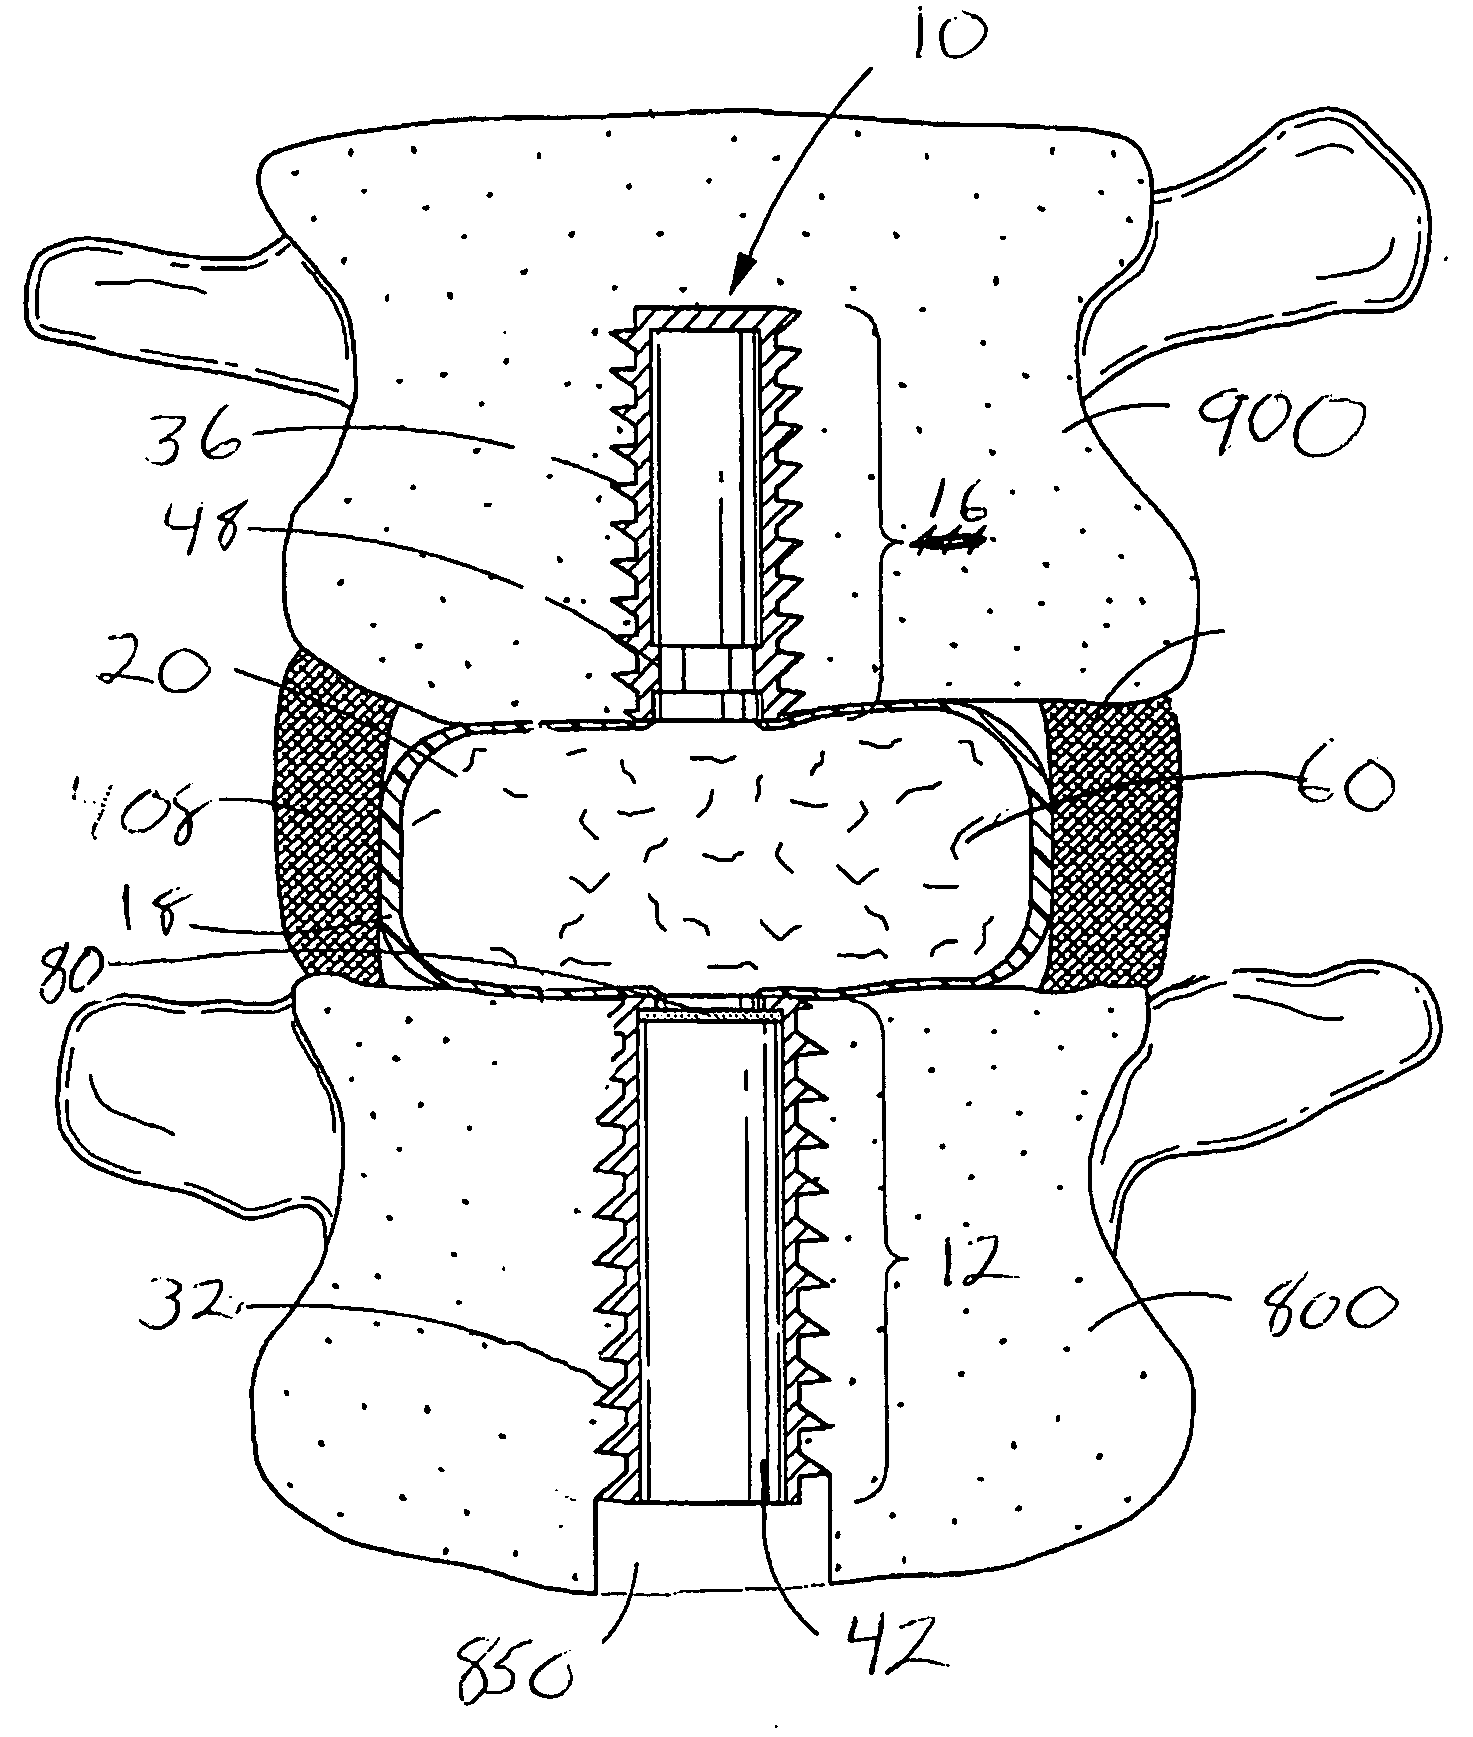 Dual anchor prosthetic nucleus apparatus